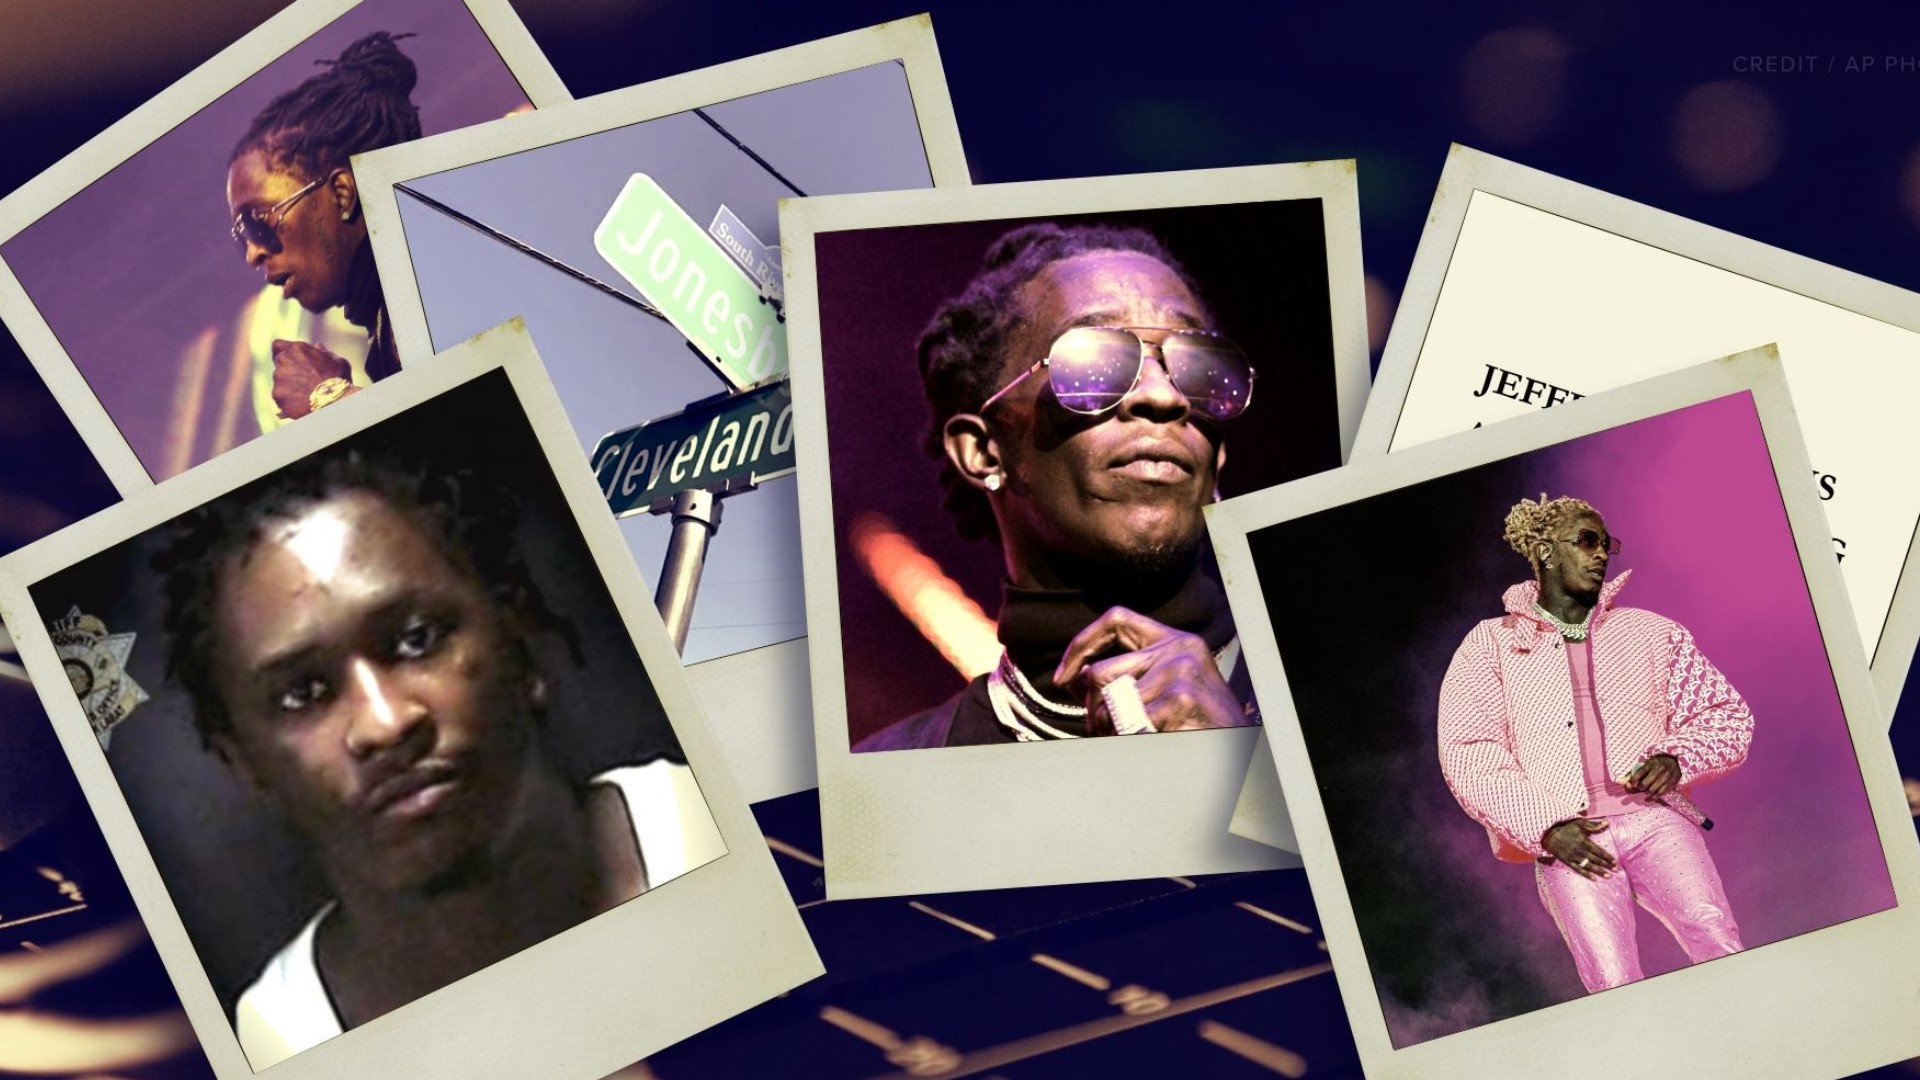 11Alive's Neima Abdulahi goes deep inside the life story of Jeffery Williams - a.k.a. rapper Young Thug.